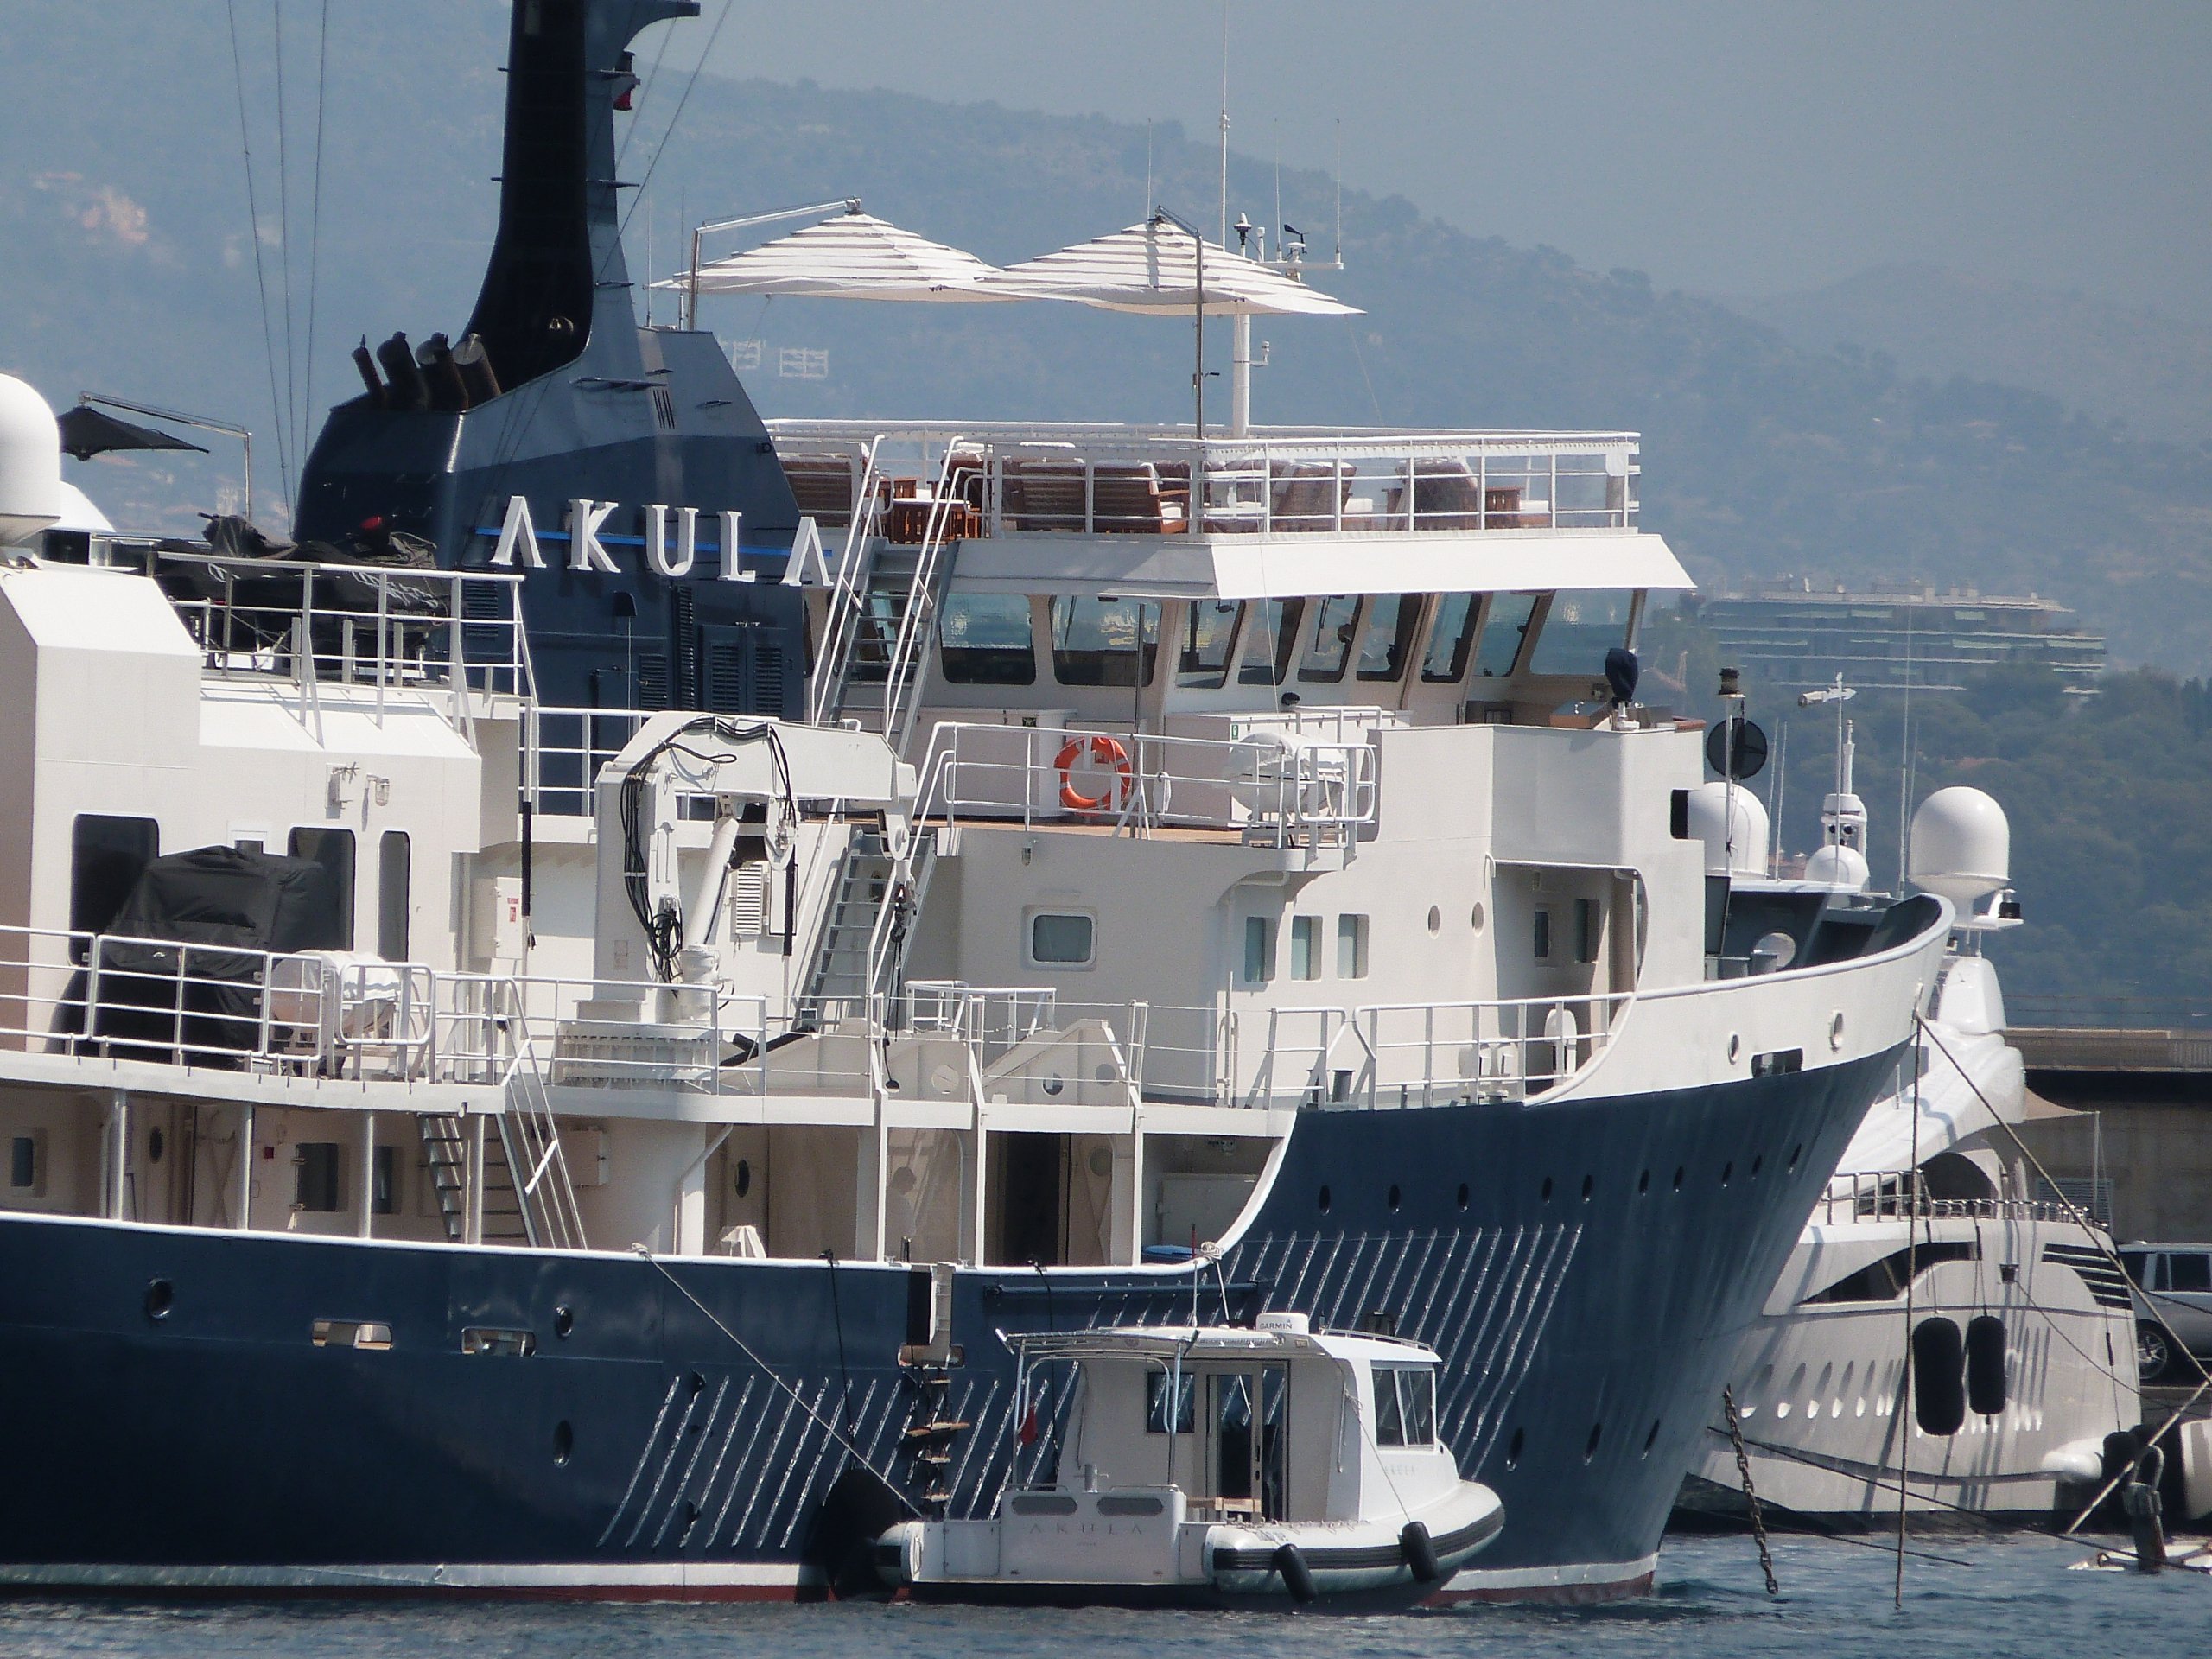 OMNIA Yacht • (ex Akula) • Amels • 2008 • Voormalige eigenaar Jonathan Faiman